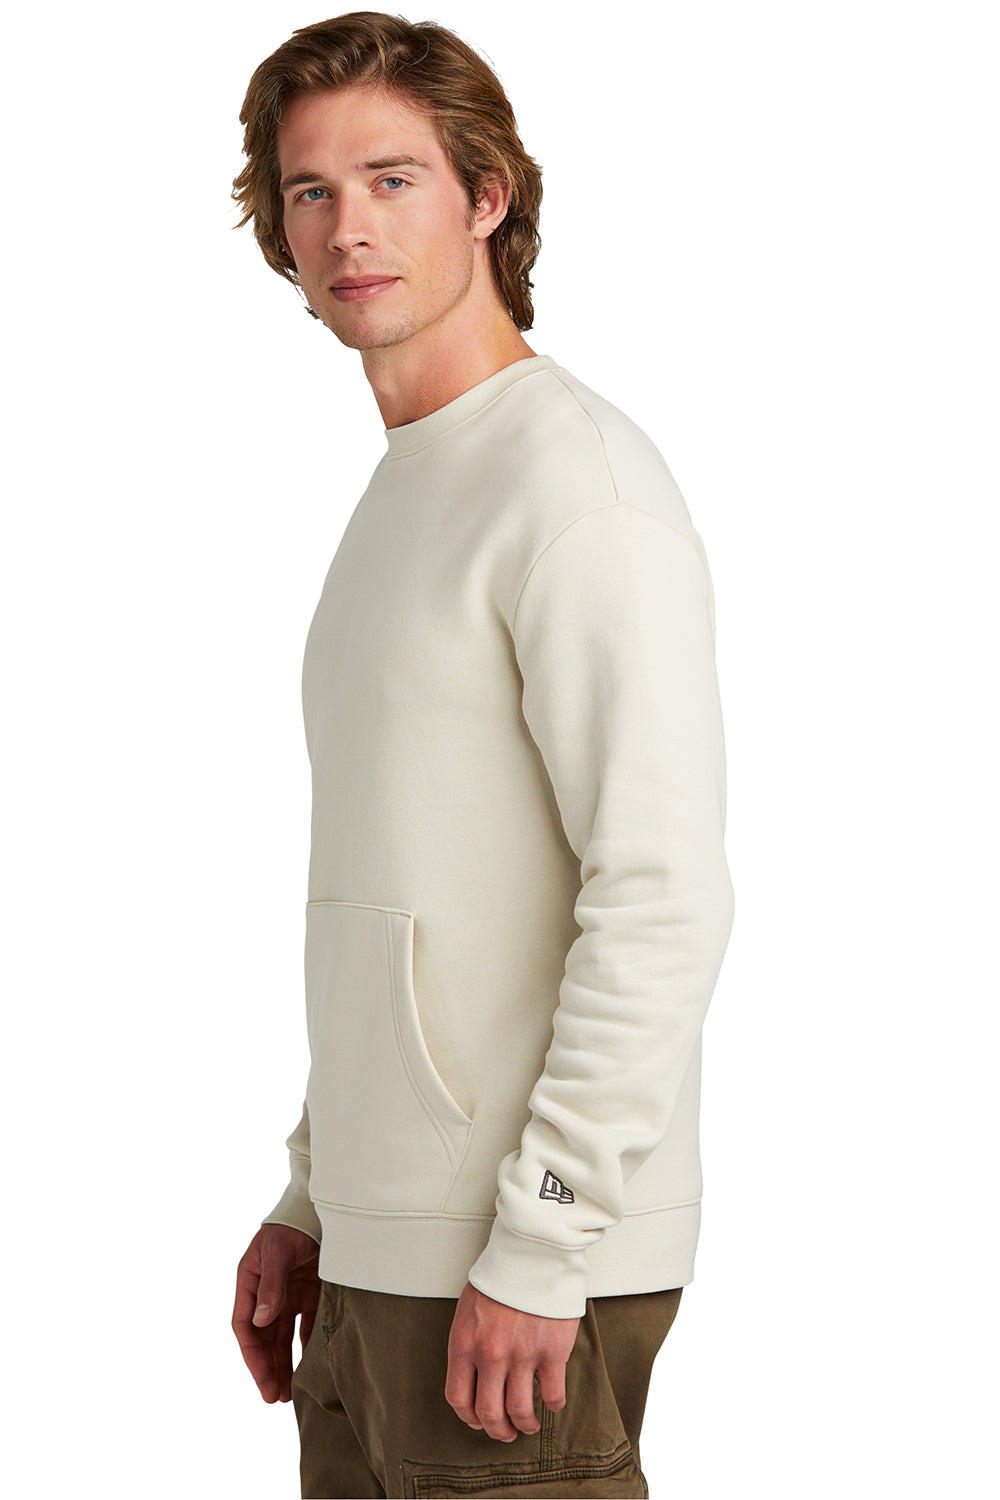 New Era NEA527 Mens Heritage Fleece Crewneck Sweatshirt w/ Pocket Soft Beige Side